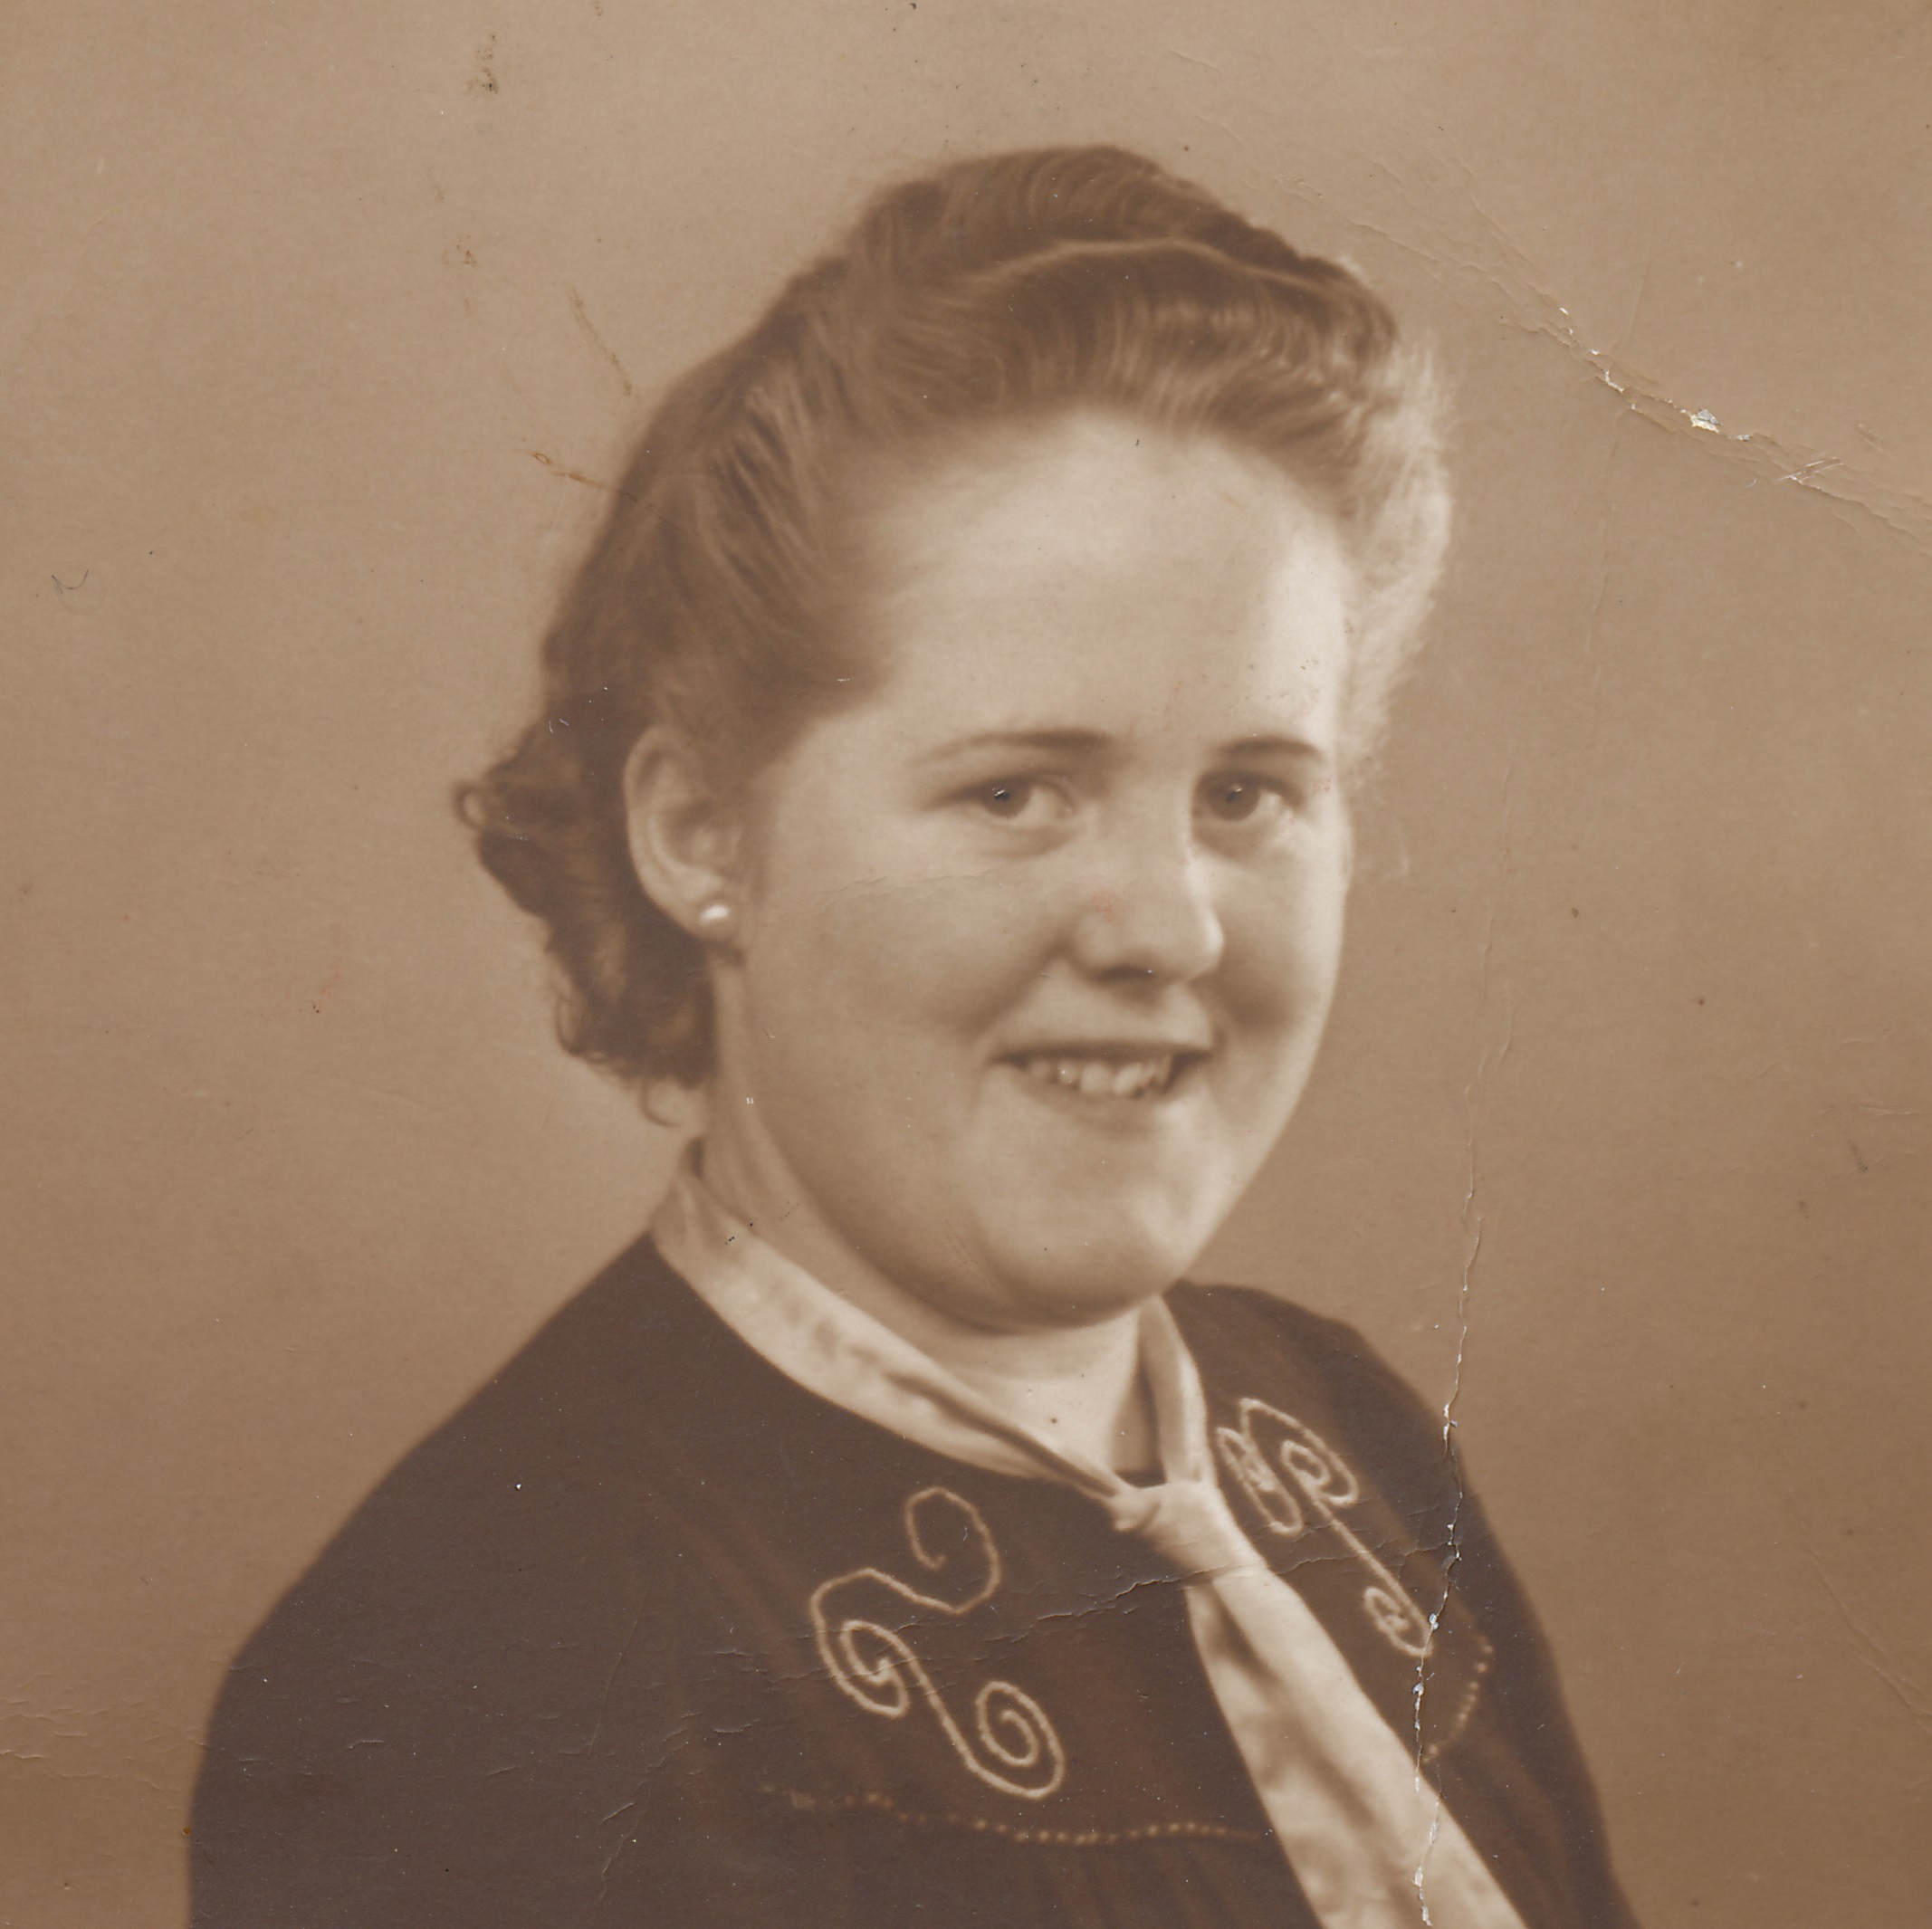 Frk. Ruth Hansen, "Nordgaarden" - ca. 1940 (B14963)